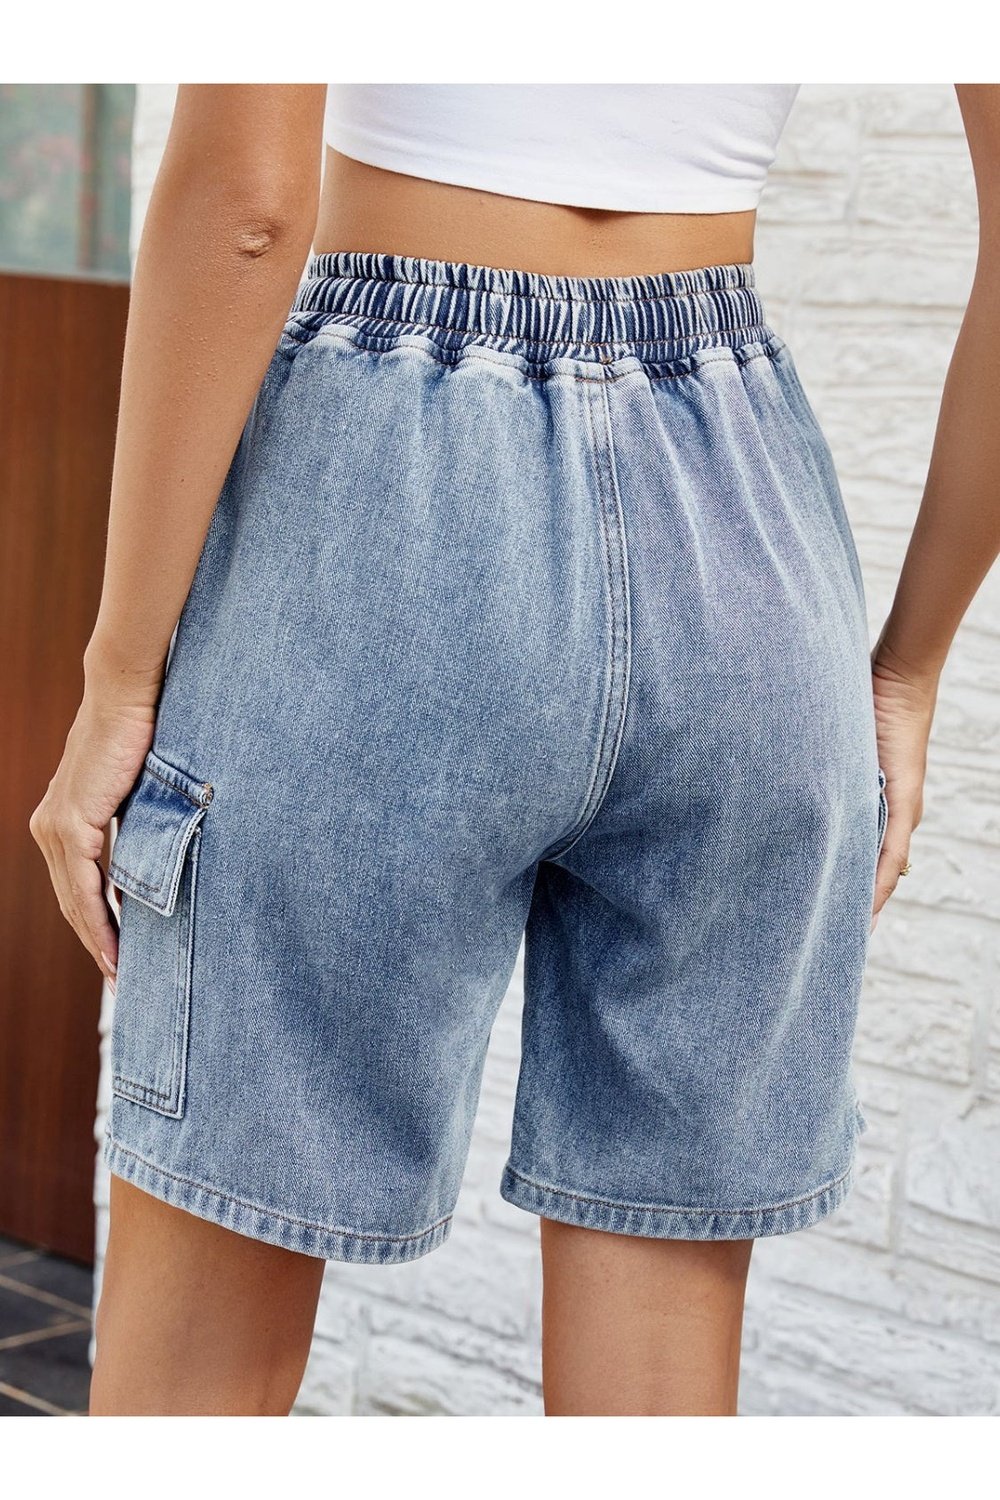 Drawstring Denim Shorts with Pockets - Denim Shorts - FITGGINS